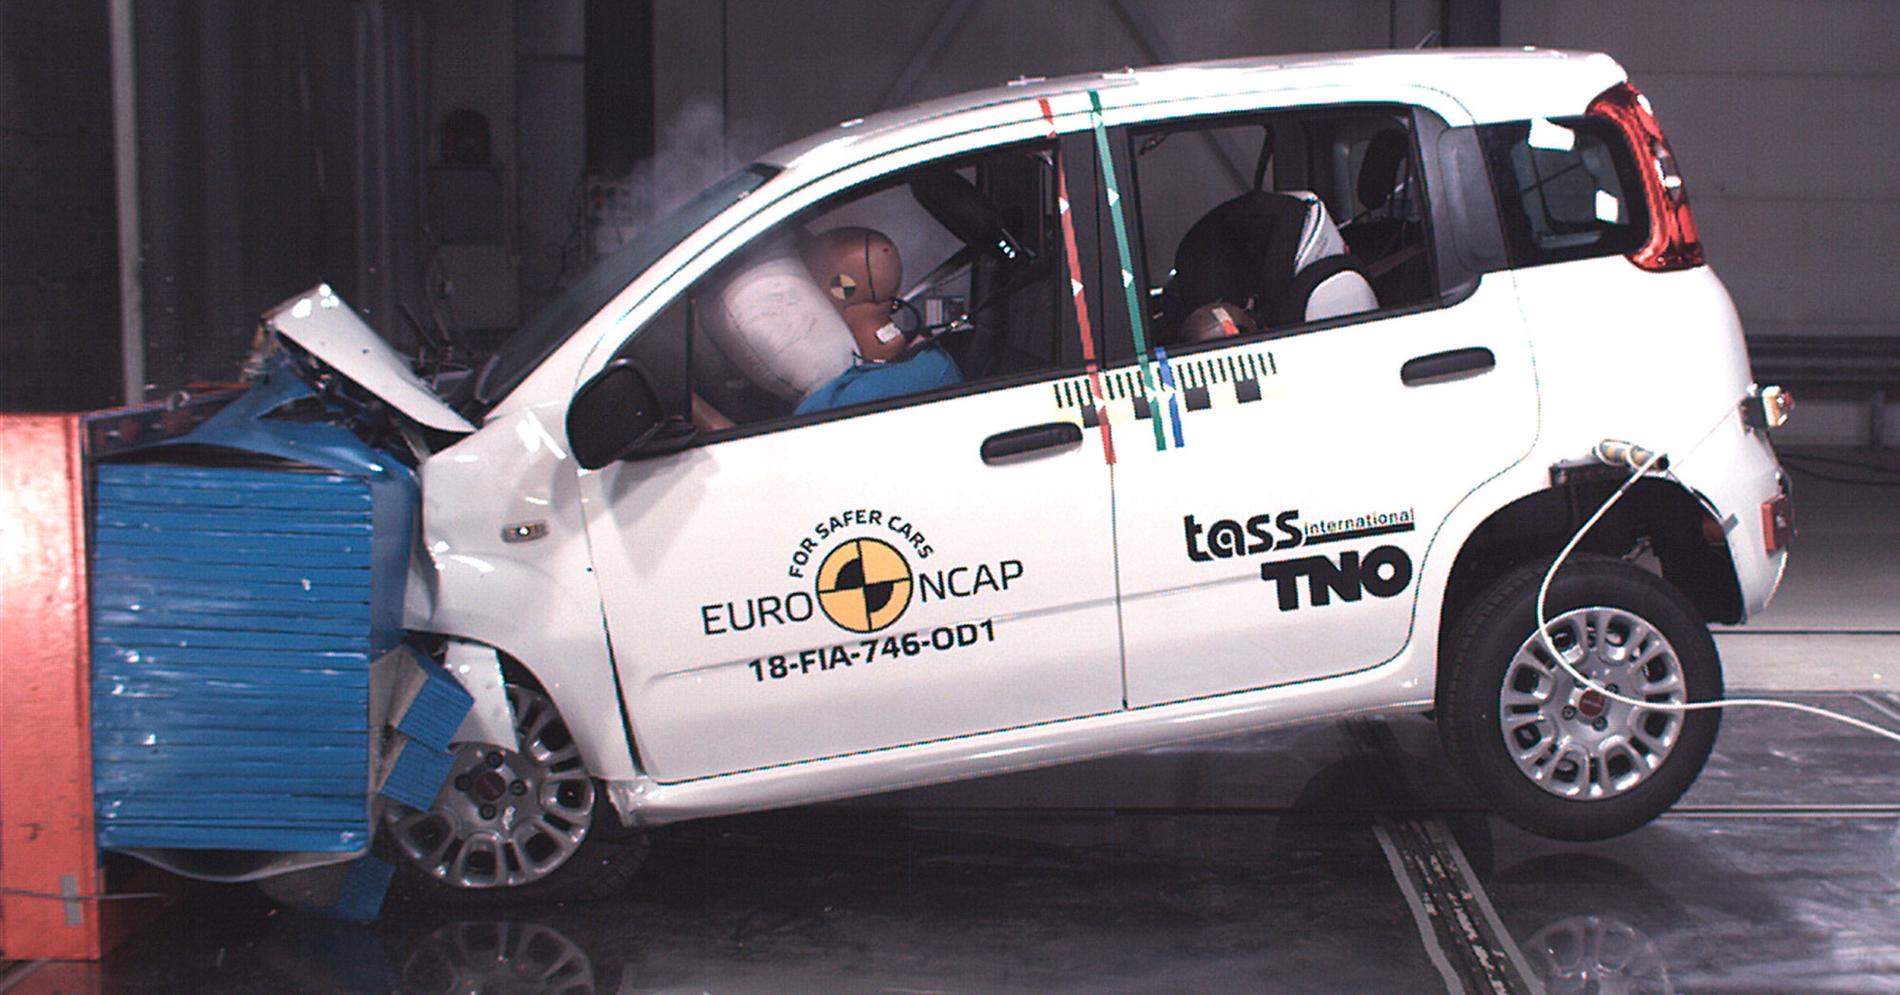 Fiat Panda fick bottenbetyget noll stjärnor i EuroNCAP 2018.